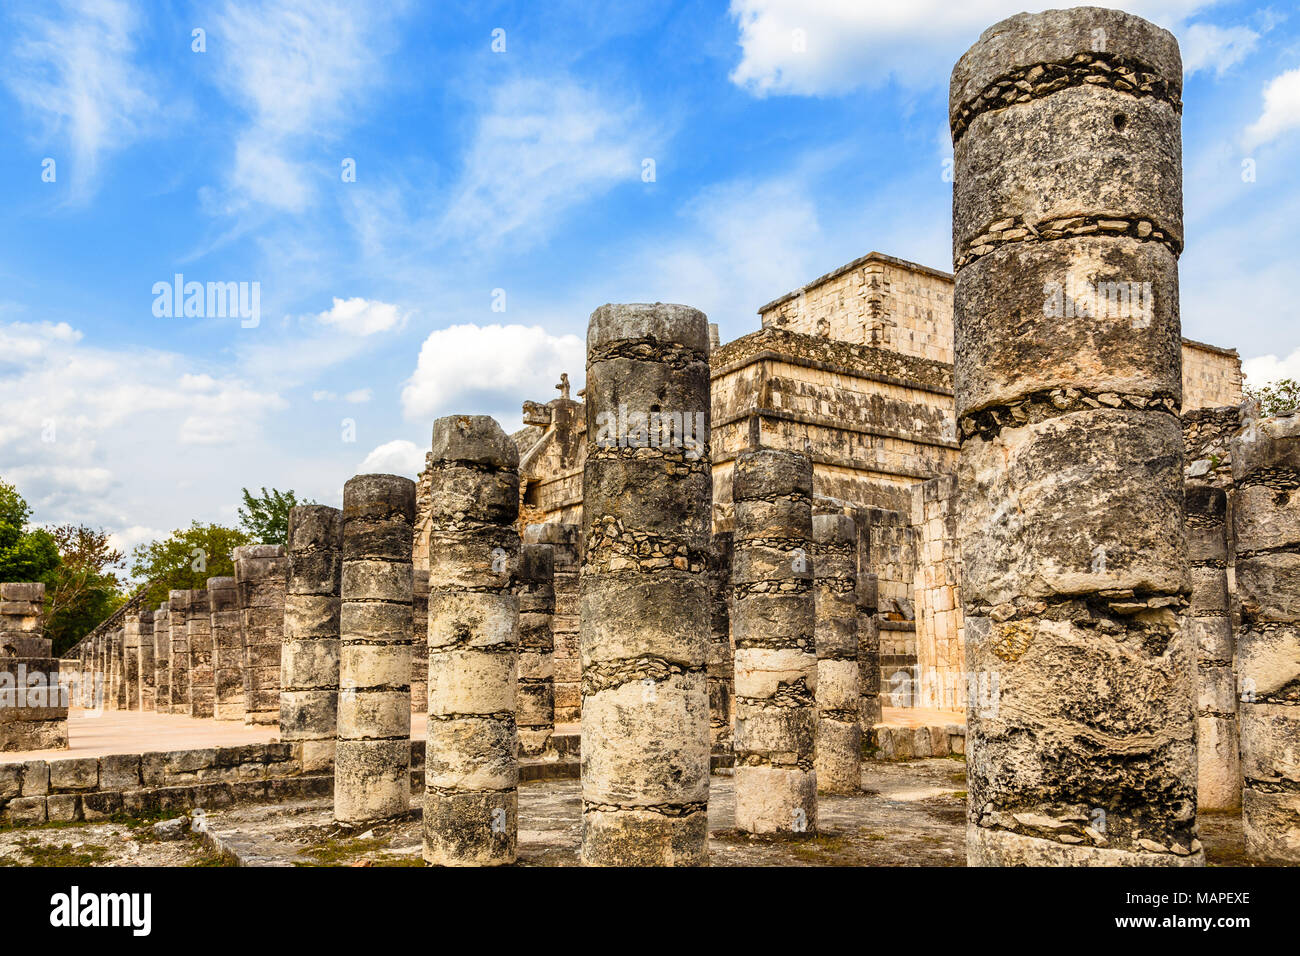 Thousand columns mayan temple complex, Chichen Itza archaeological site, Yucatan, Mexico Stock Photo